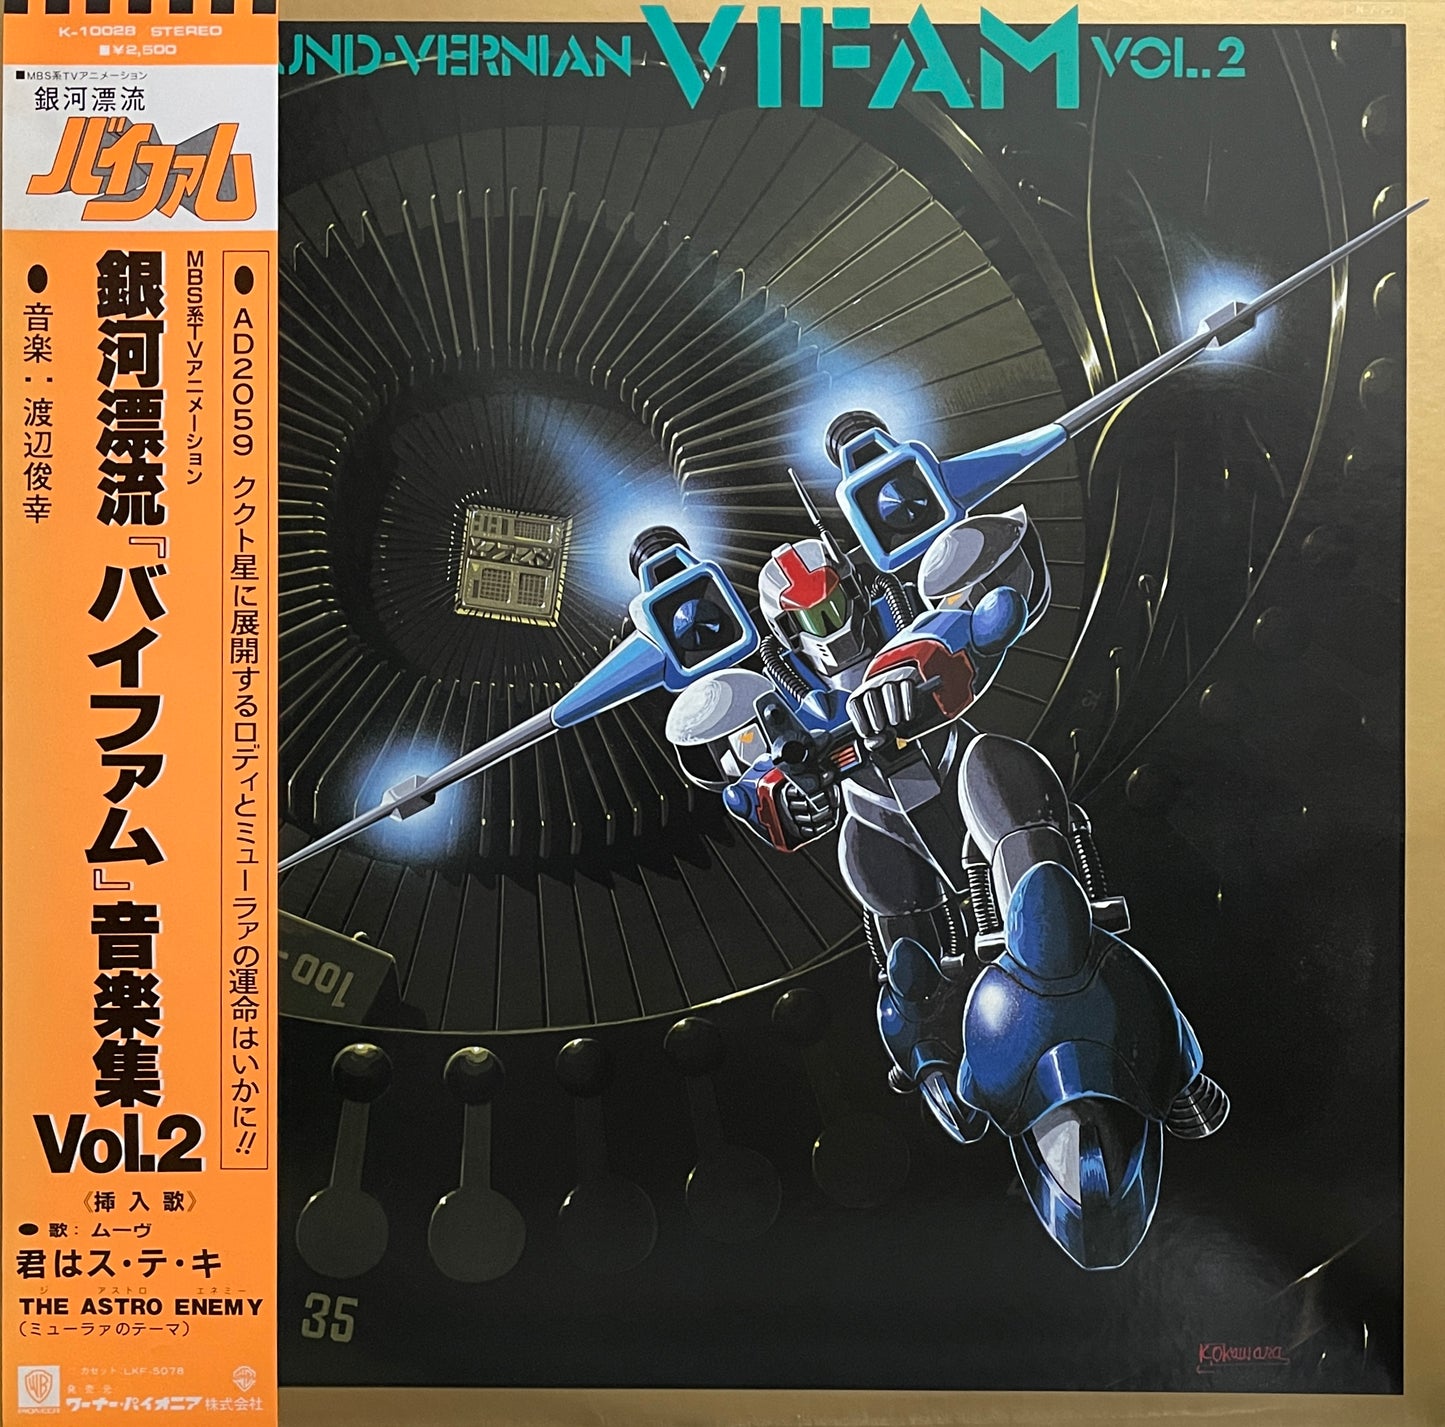 Round-Vernian Vifam Vol.2 (1984)